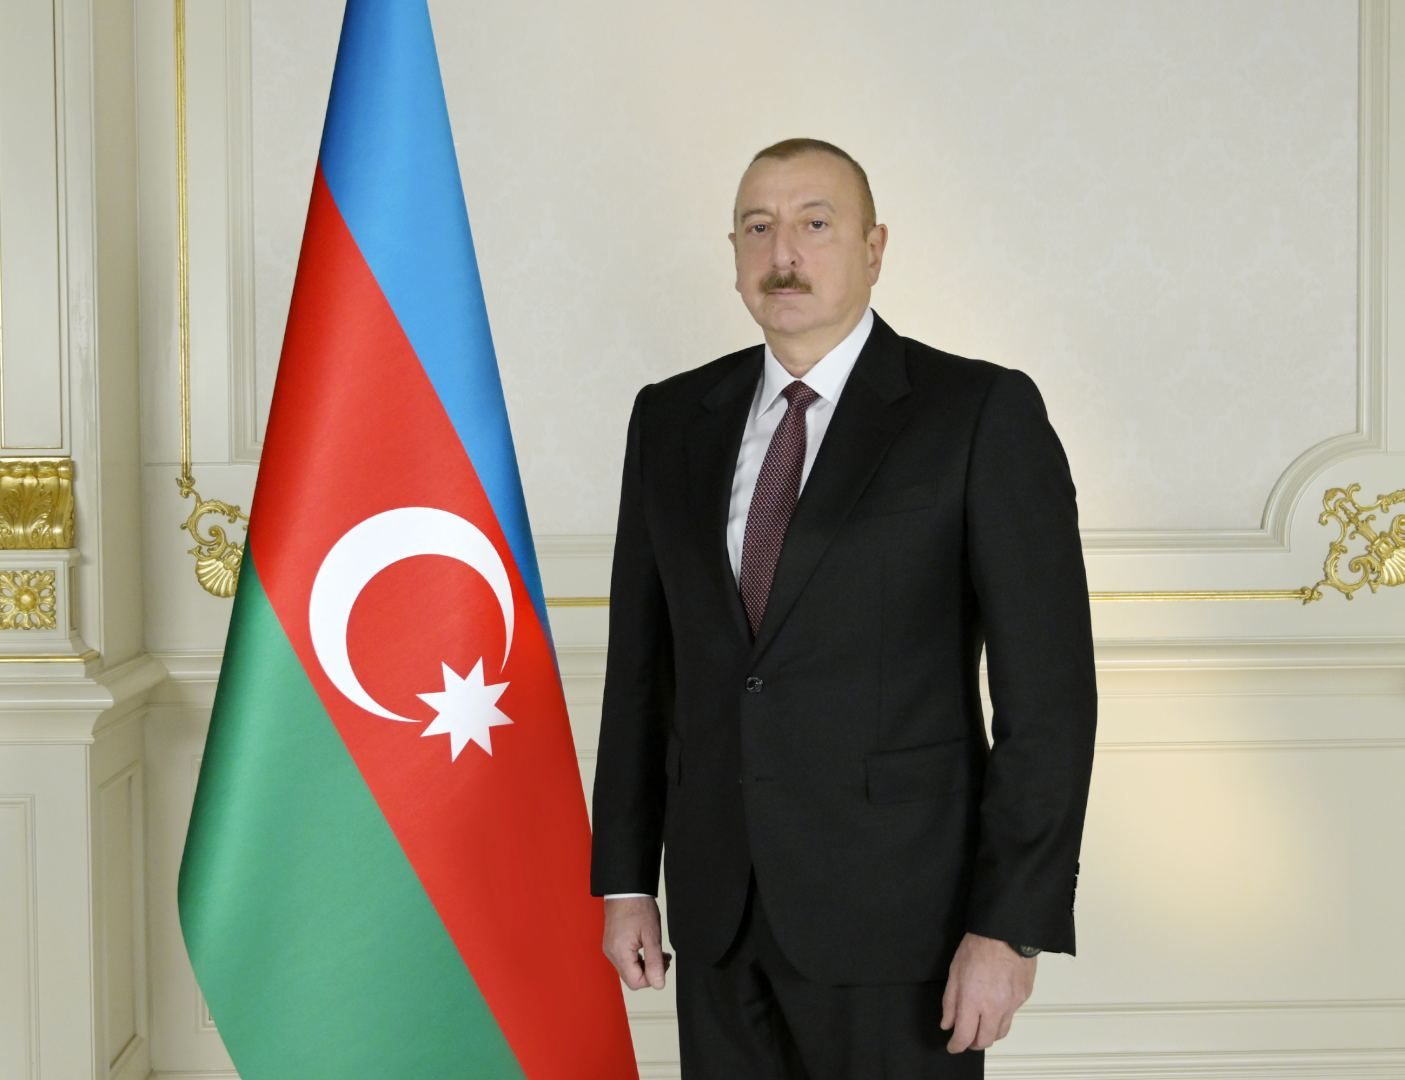 Azerbaijani President makes post on National Salvation Day [PHOTO]